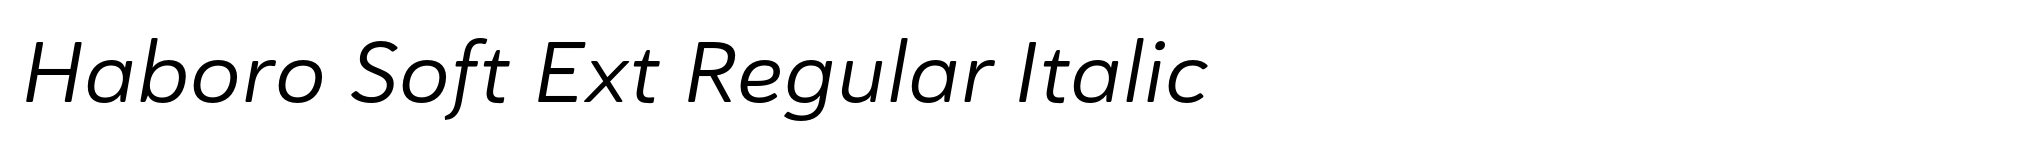 Haboro Soft Ext Regular Italic image